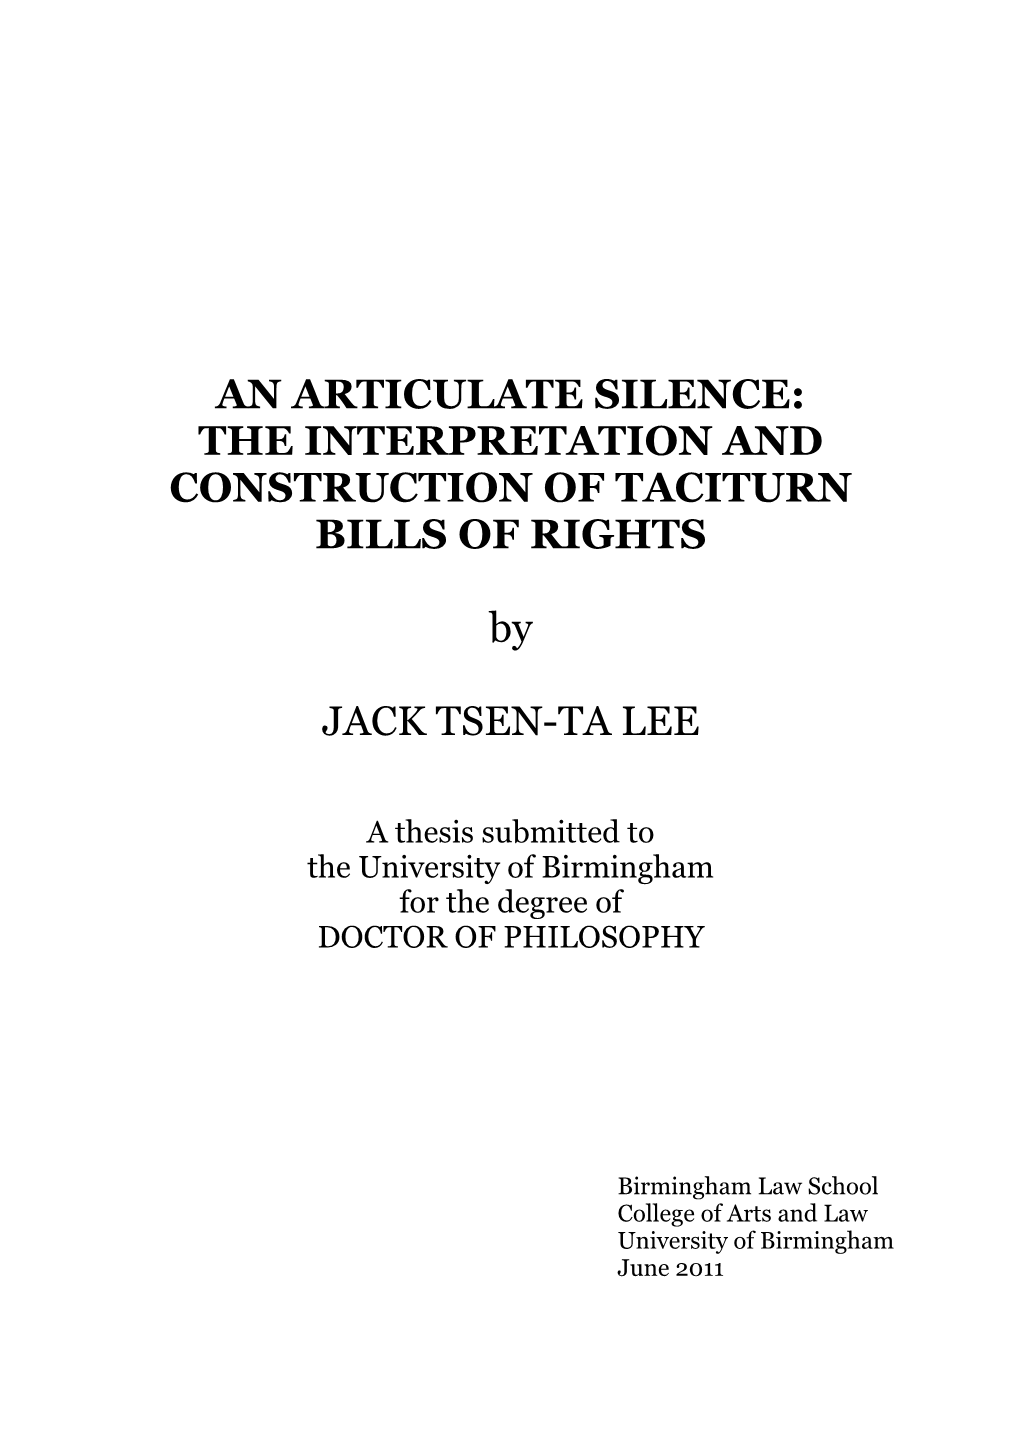 The Interpretation and Construction of Taciturn Bills of Rights